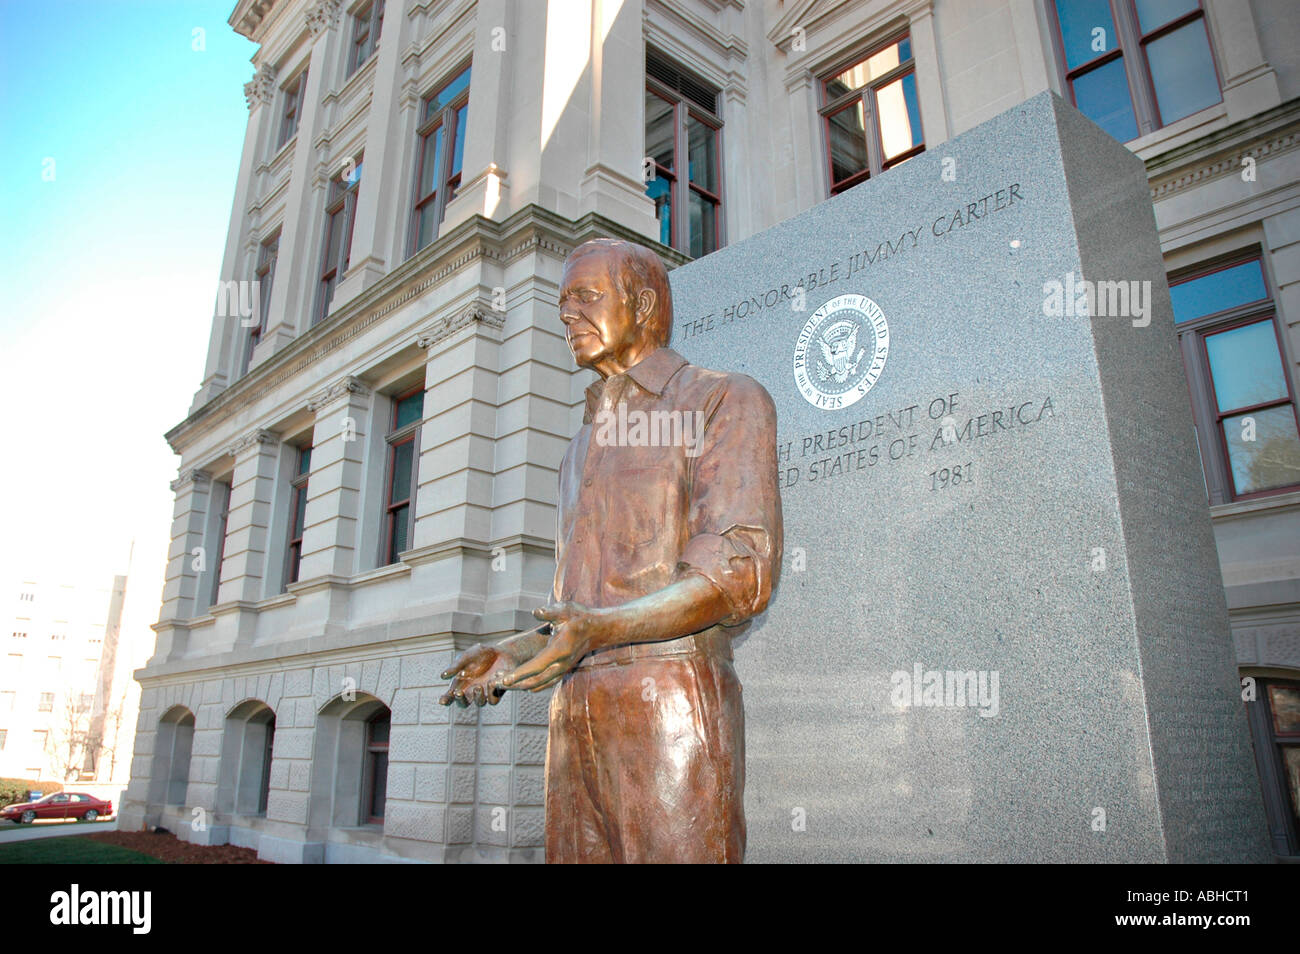 Jimmy Carter President of US USA statue at GA Georgia State Capitol building in Atlanta, GA Governor Stock Photo